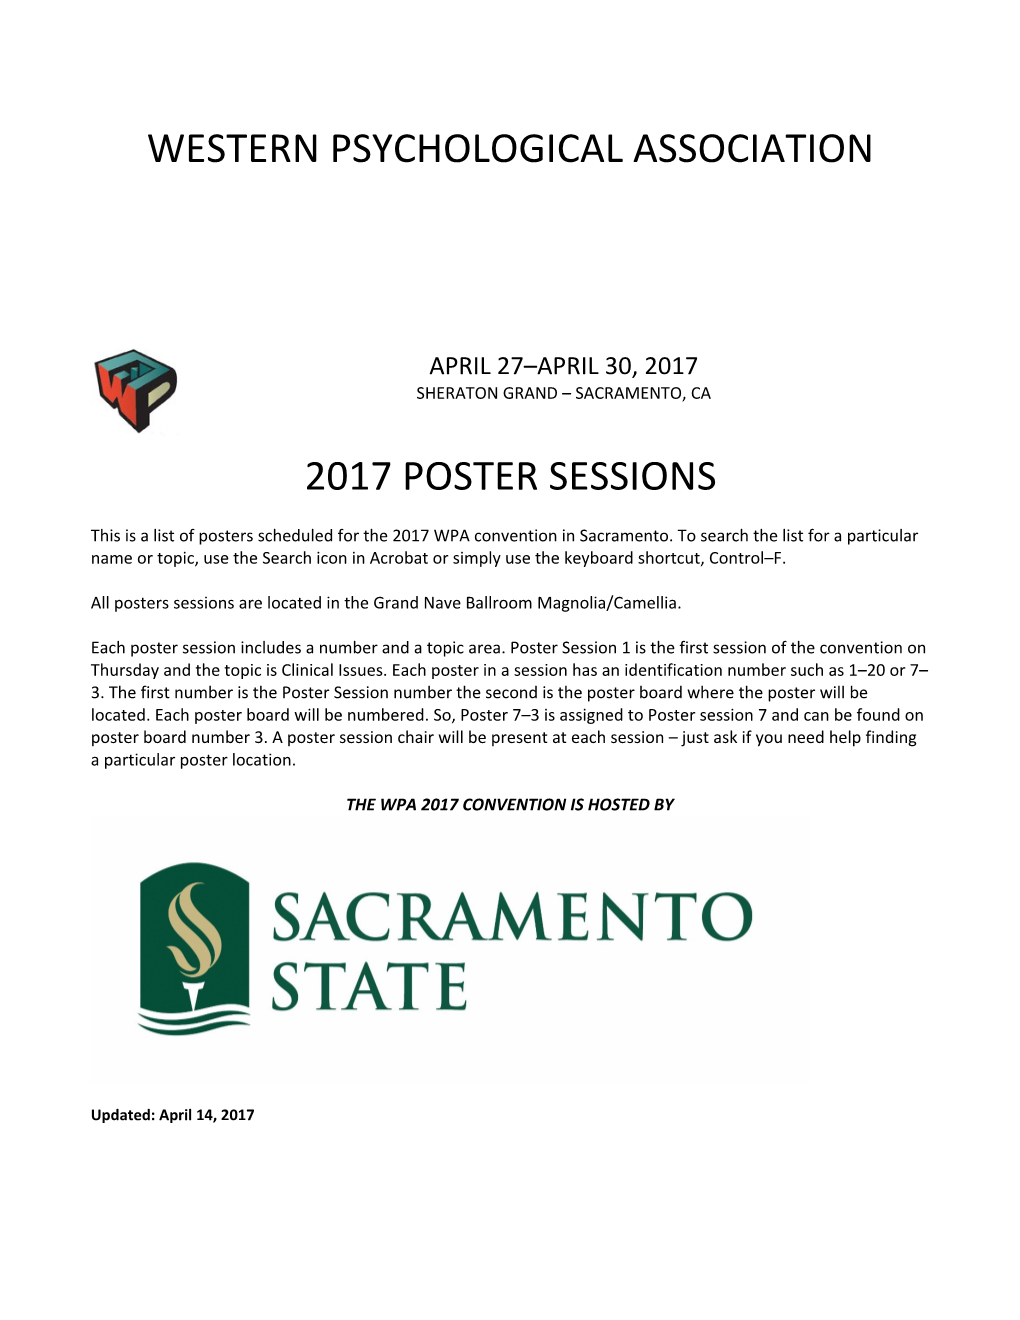 Westernpsychological Association